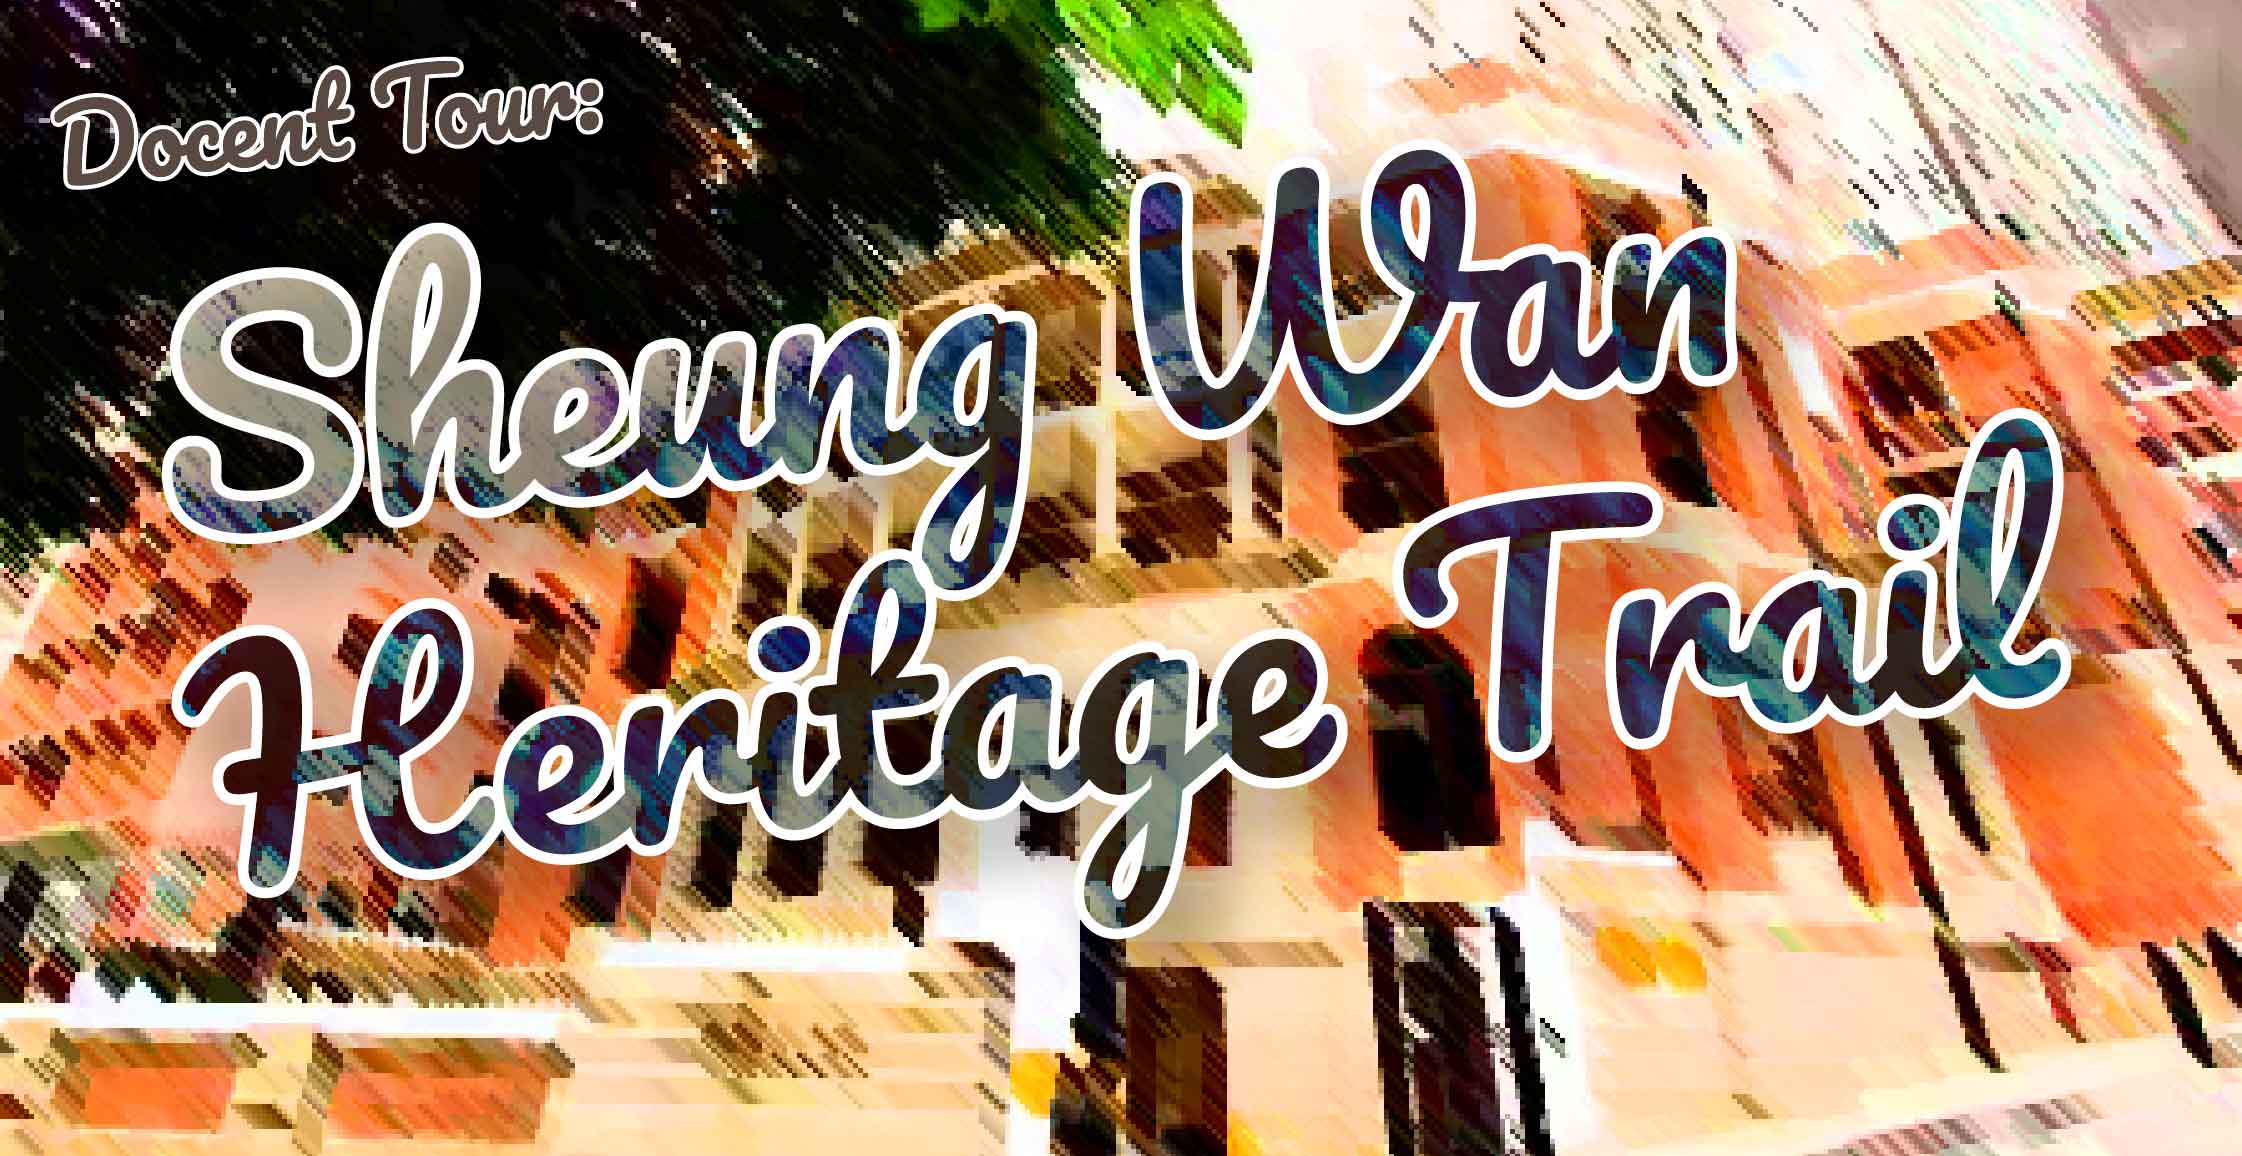 Sheung Wan Heritage Trail